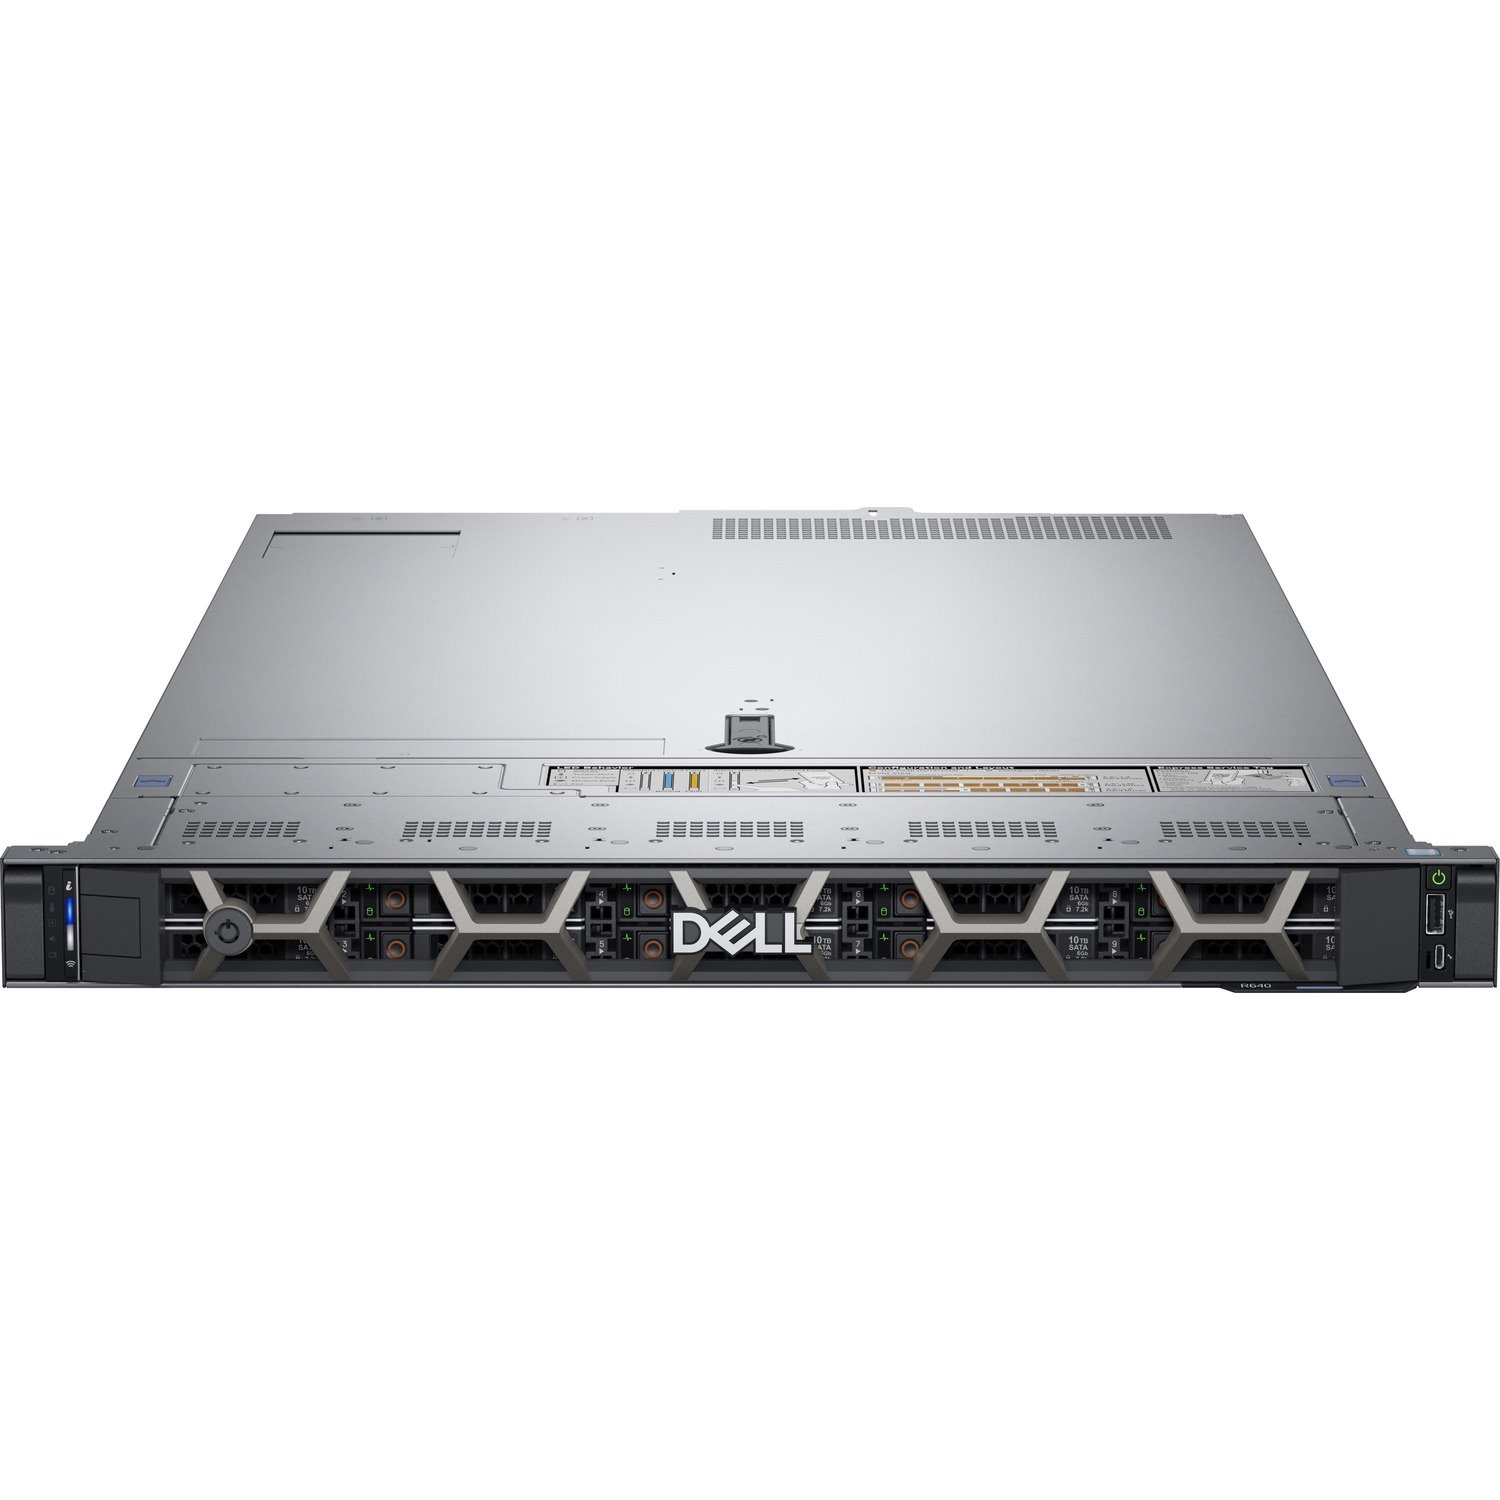 Dell EMC PowerEdge R640 1U Rack Server - 2 x Intel Xeon Gold 5218 2.30 GHz - 64 GB RAM - 480 GB SSD - 12Gb/s SAS, Serial ATA/600 Controller - 3 Year ProSupport